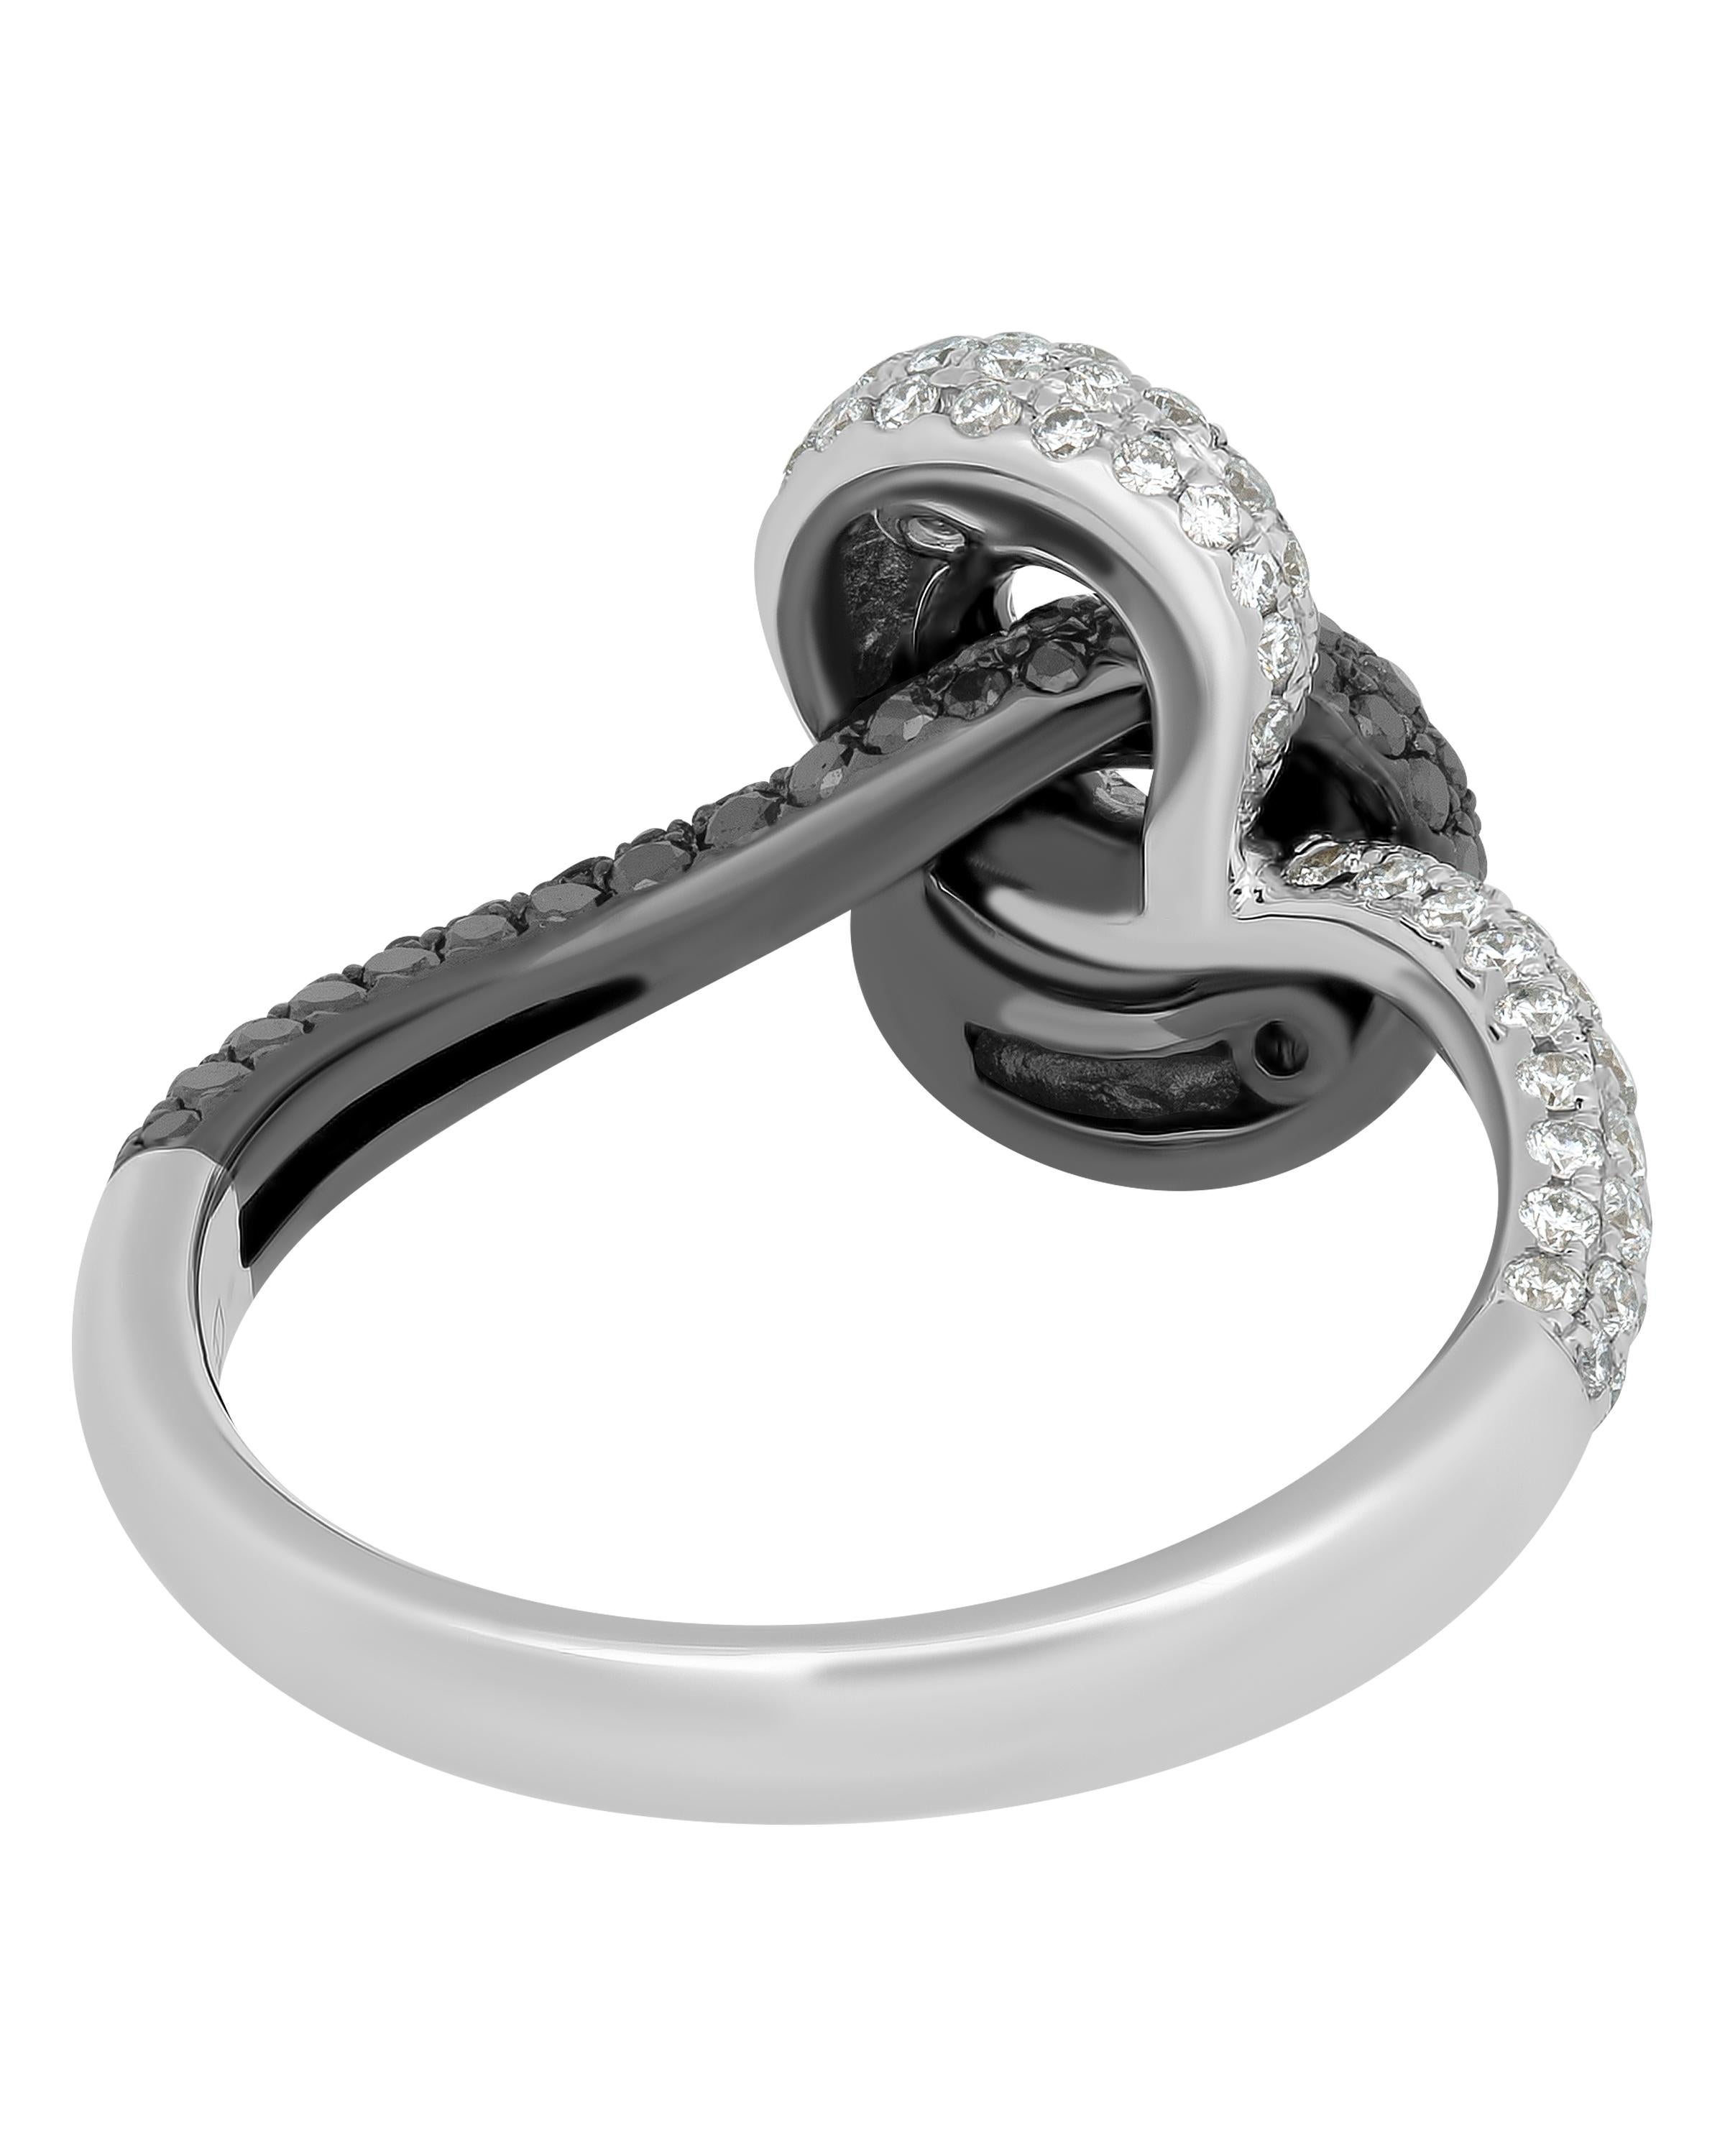 Contemporary Piero Milano 18K White and Black Gold, Black & White Diamond  Ring Sz 6.75 For Sale